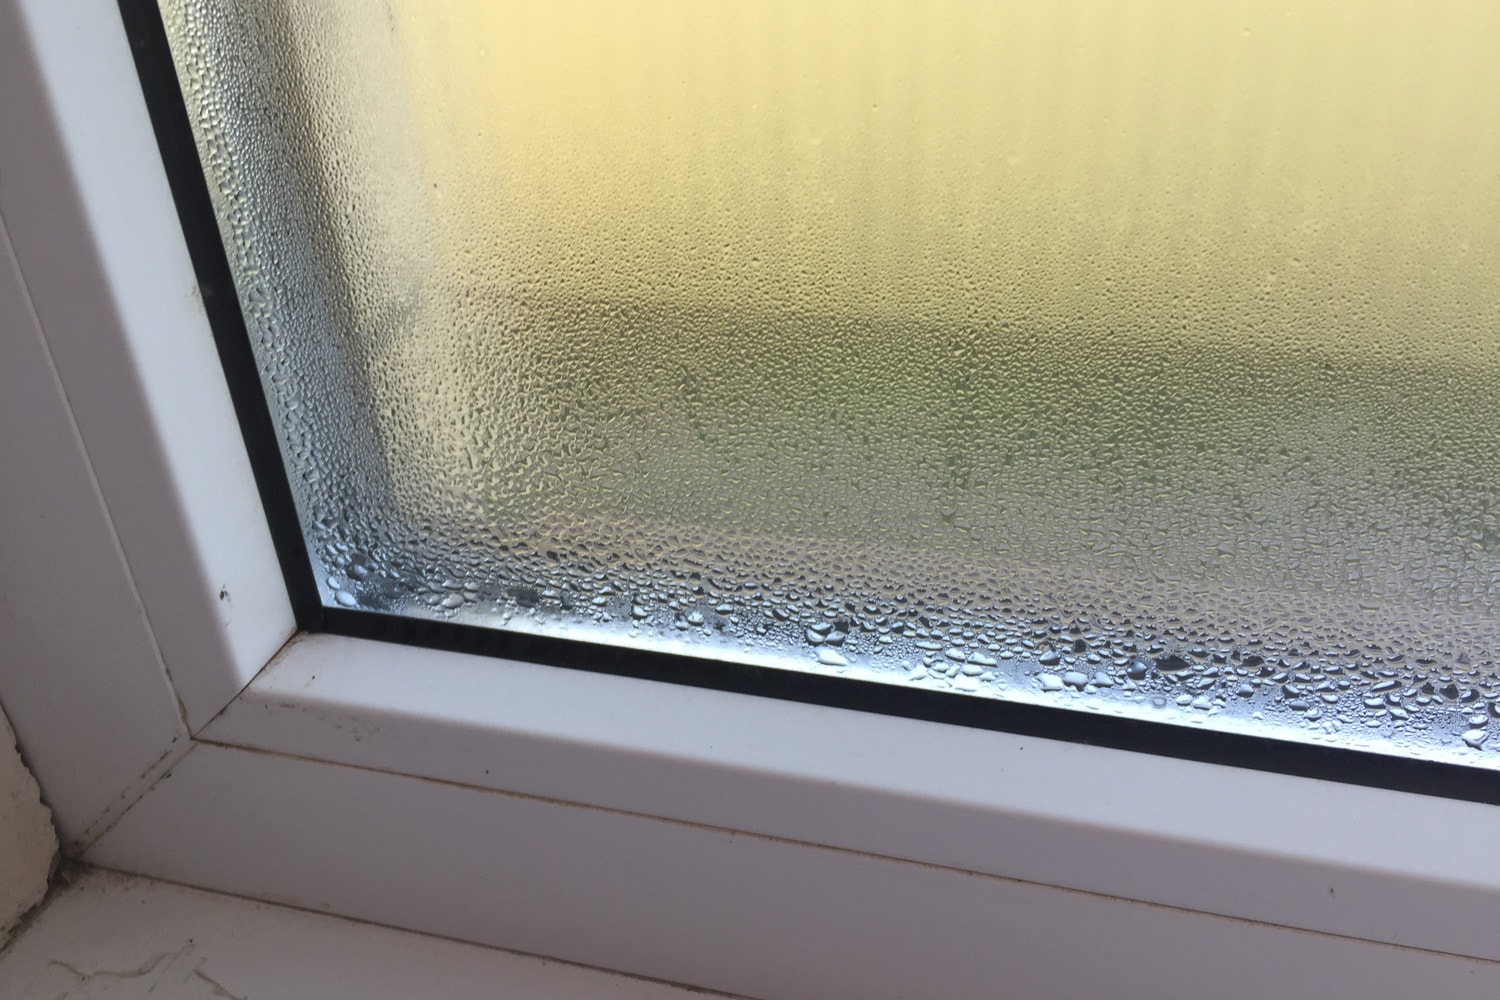 Fogged plastic window with condensation